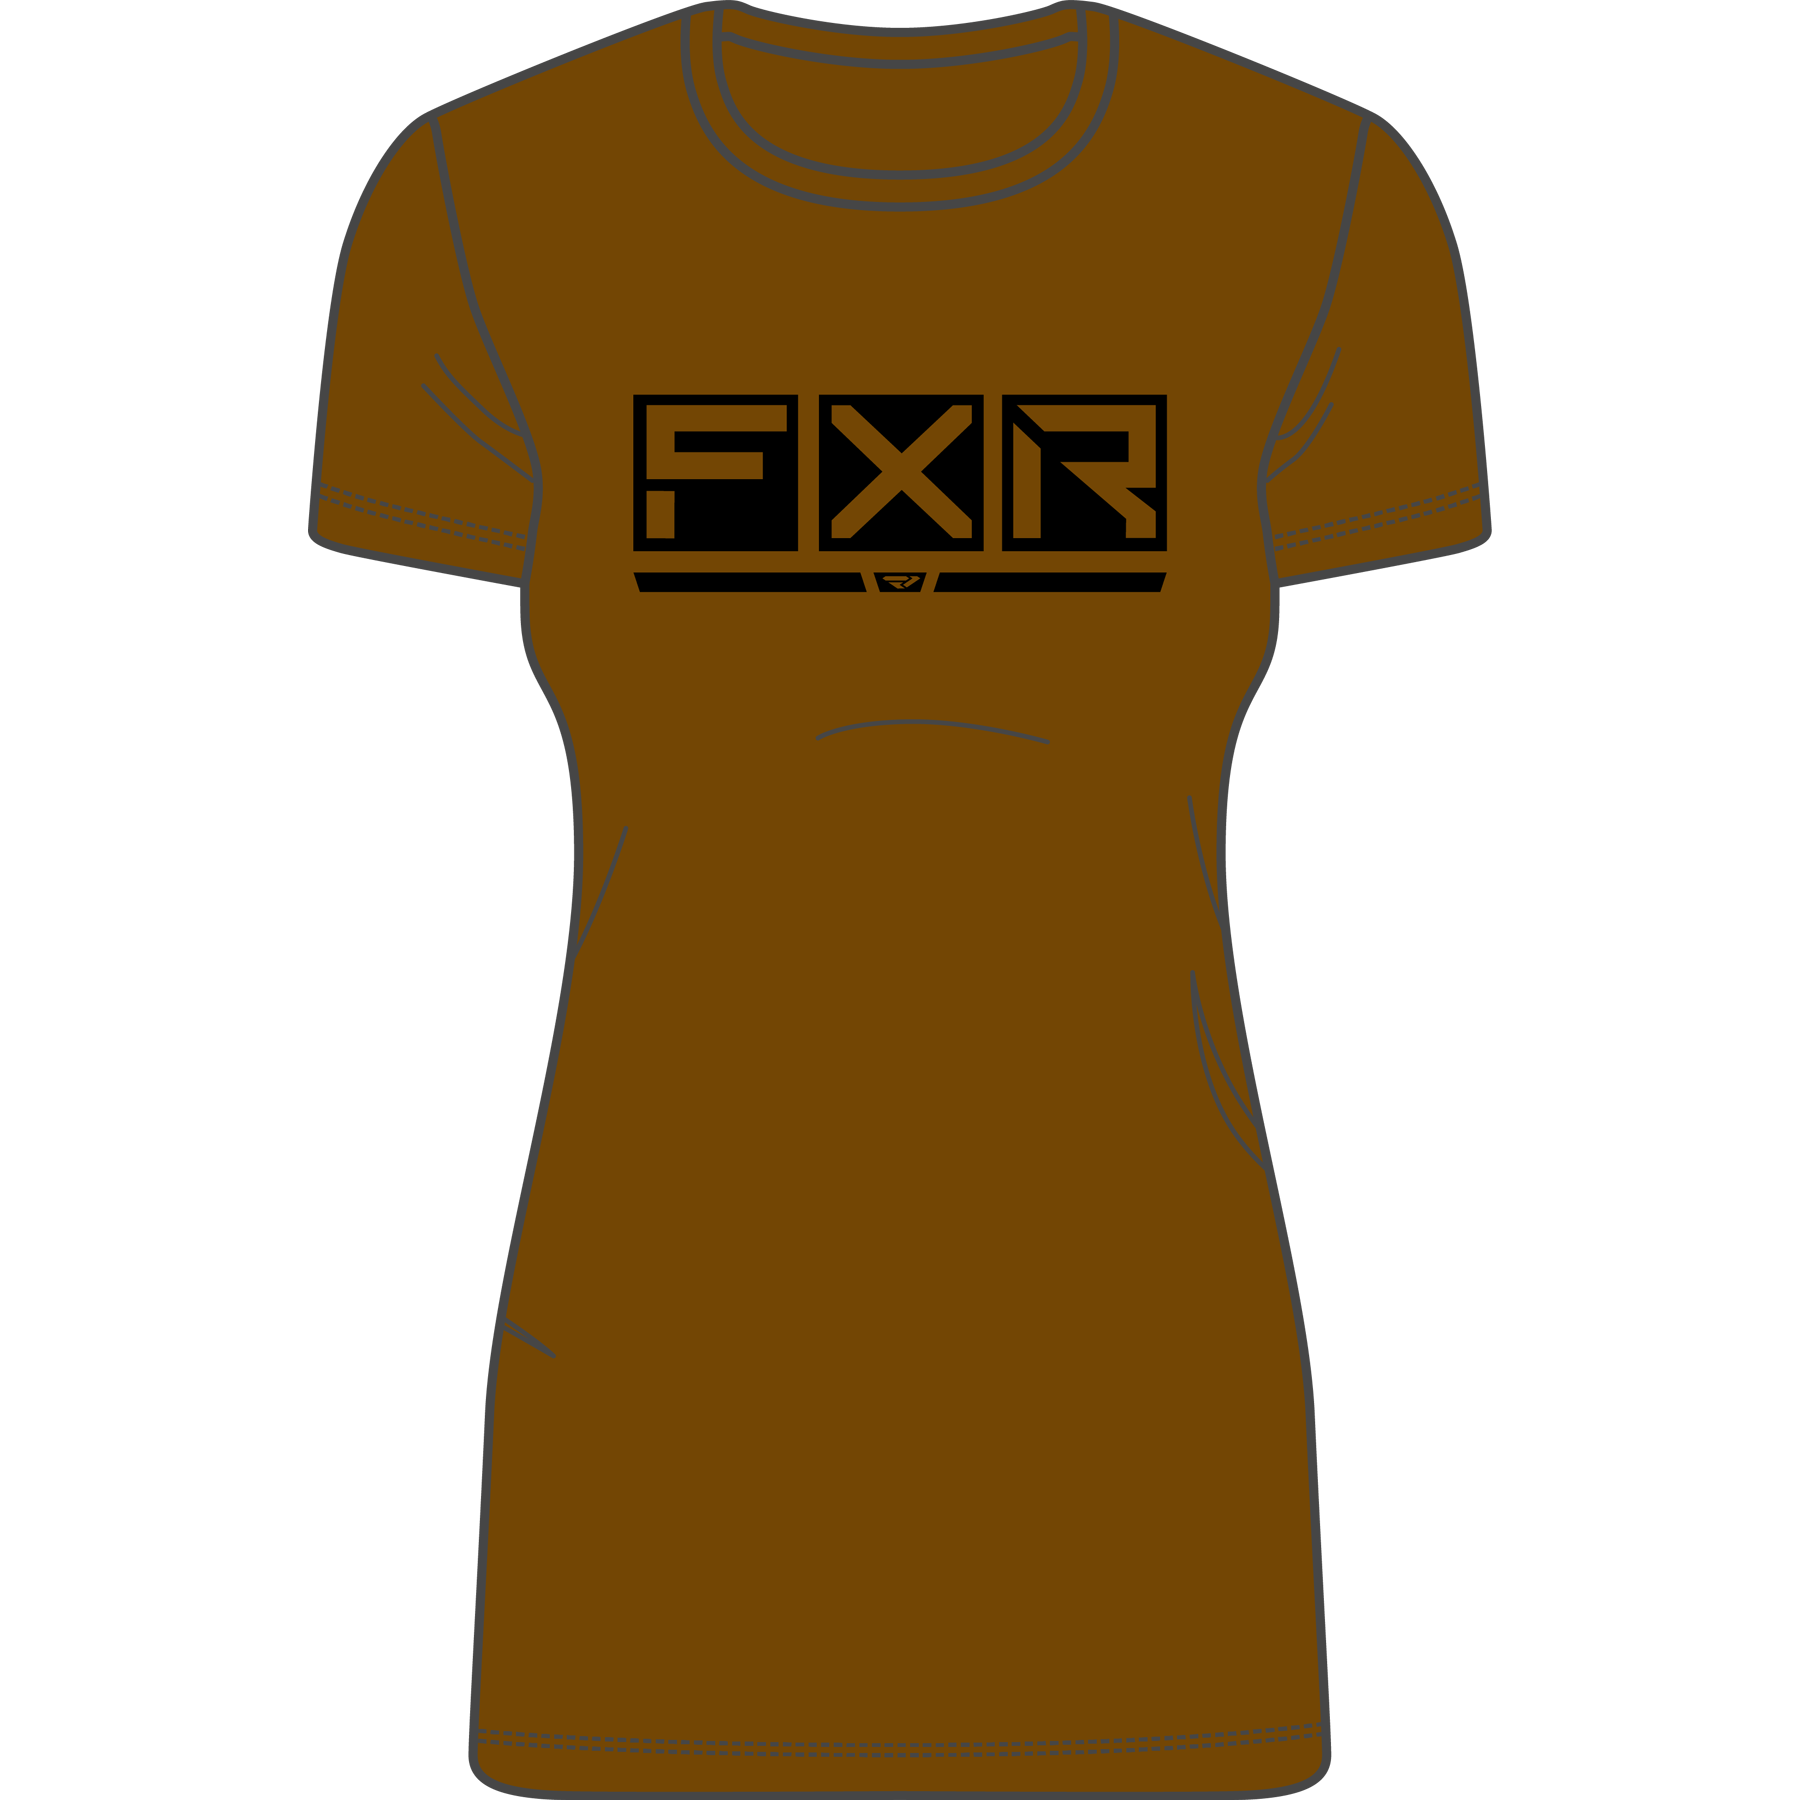 fxr racing t-shirt shirts for womens podium premium